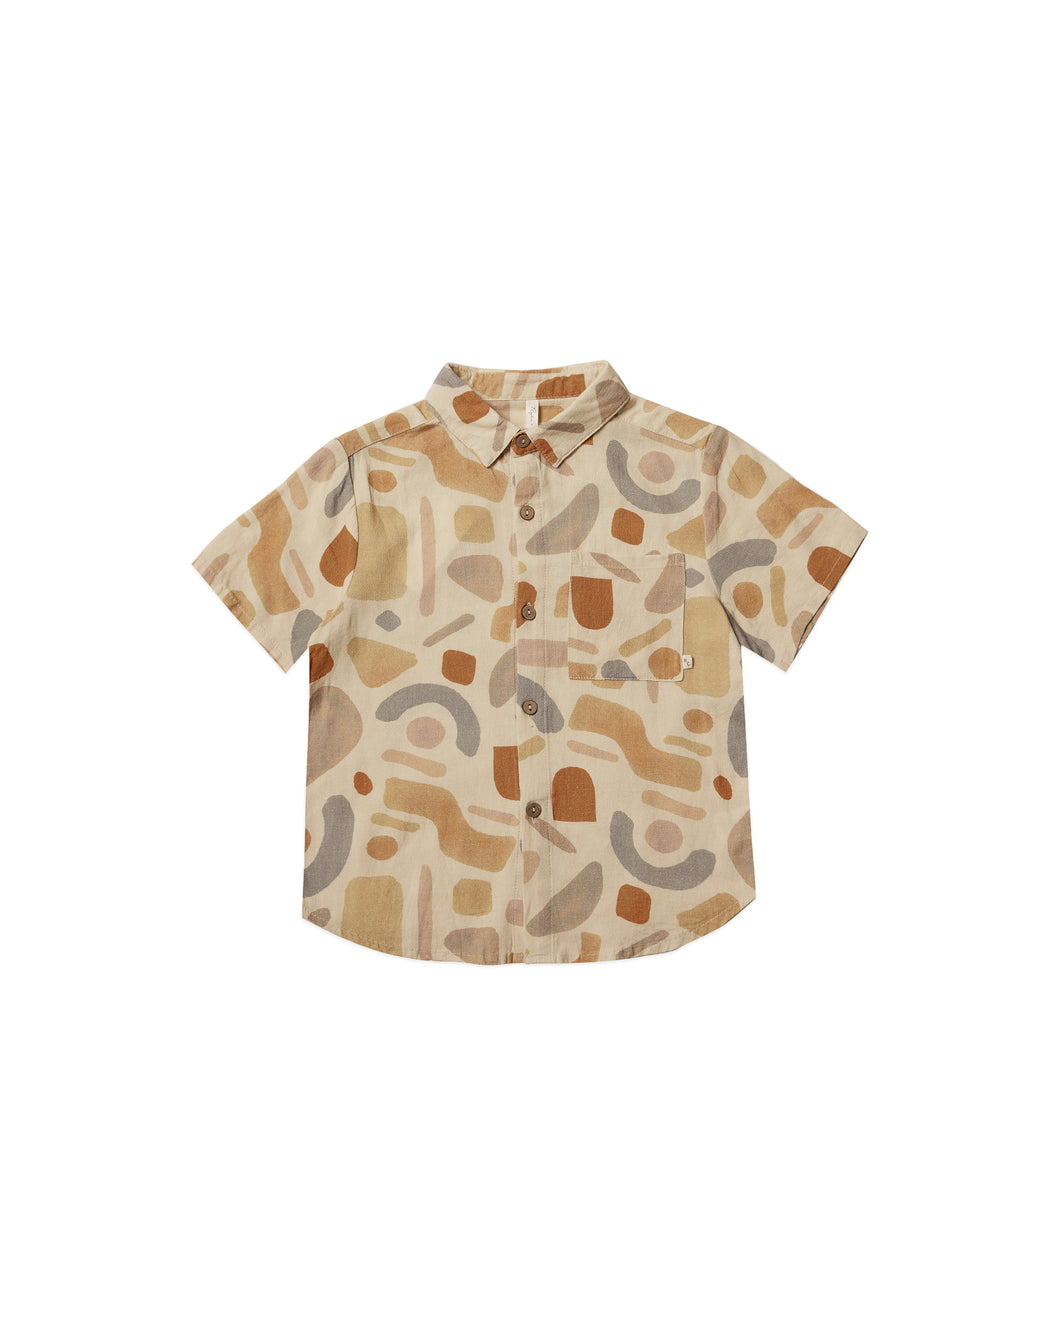 Collared short sleeve shirt - abstract